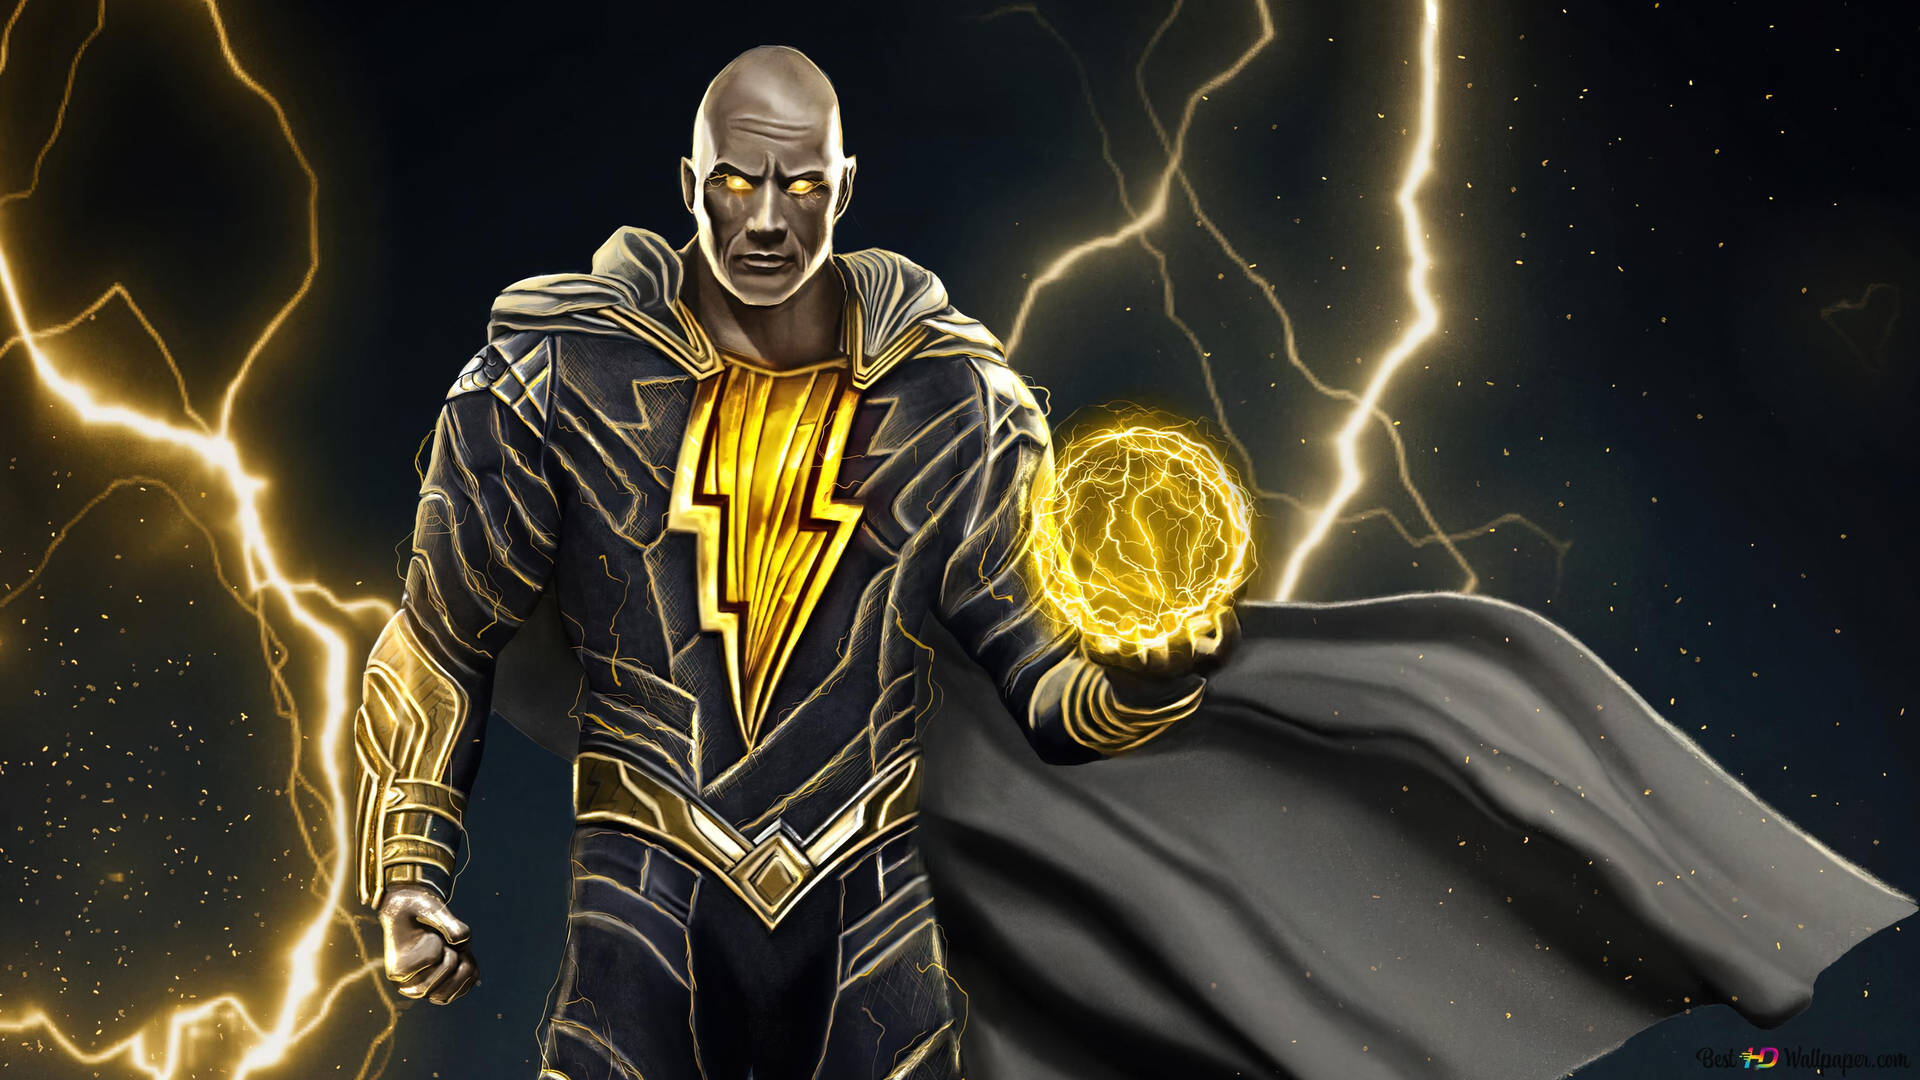 Dwayne Johnson As Dc Universe Superhero Background